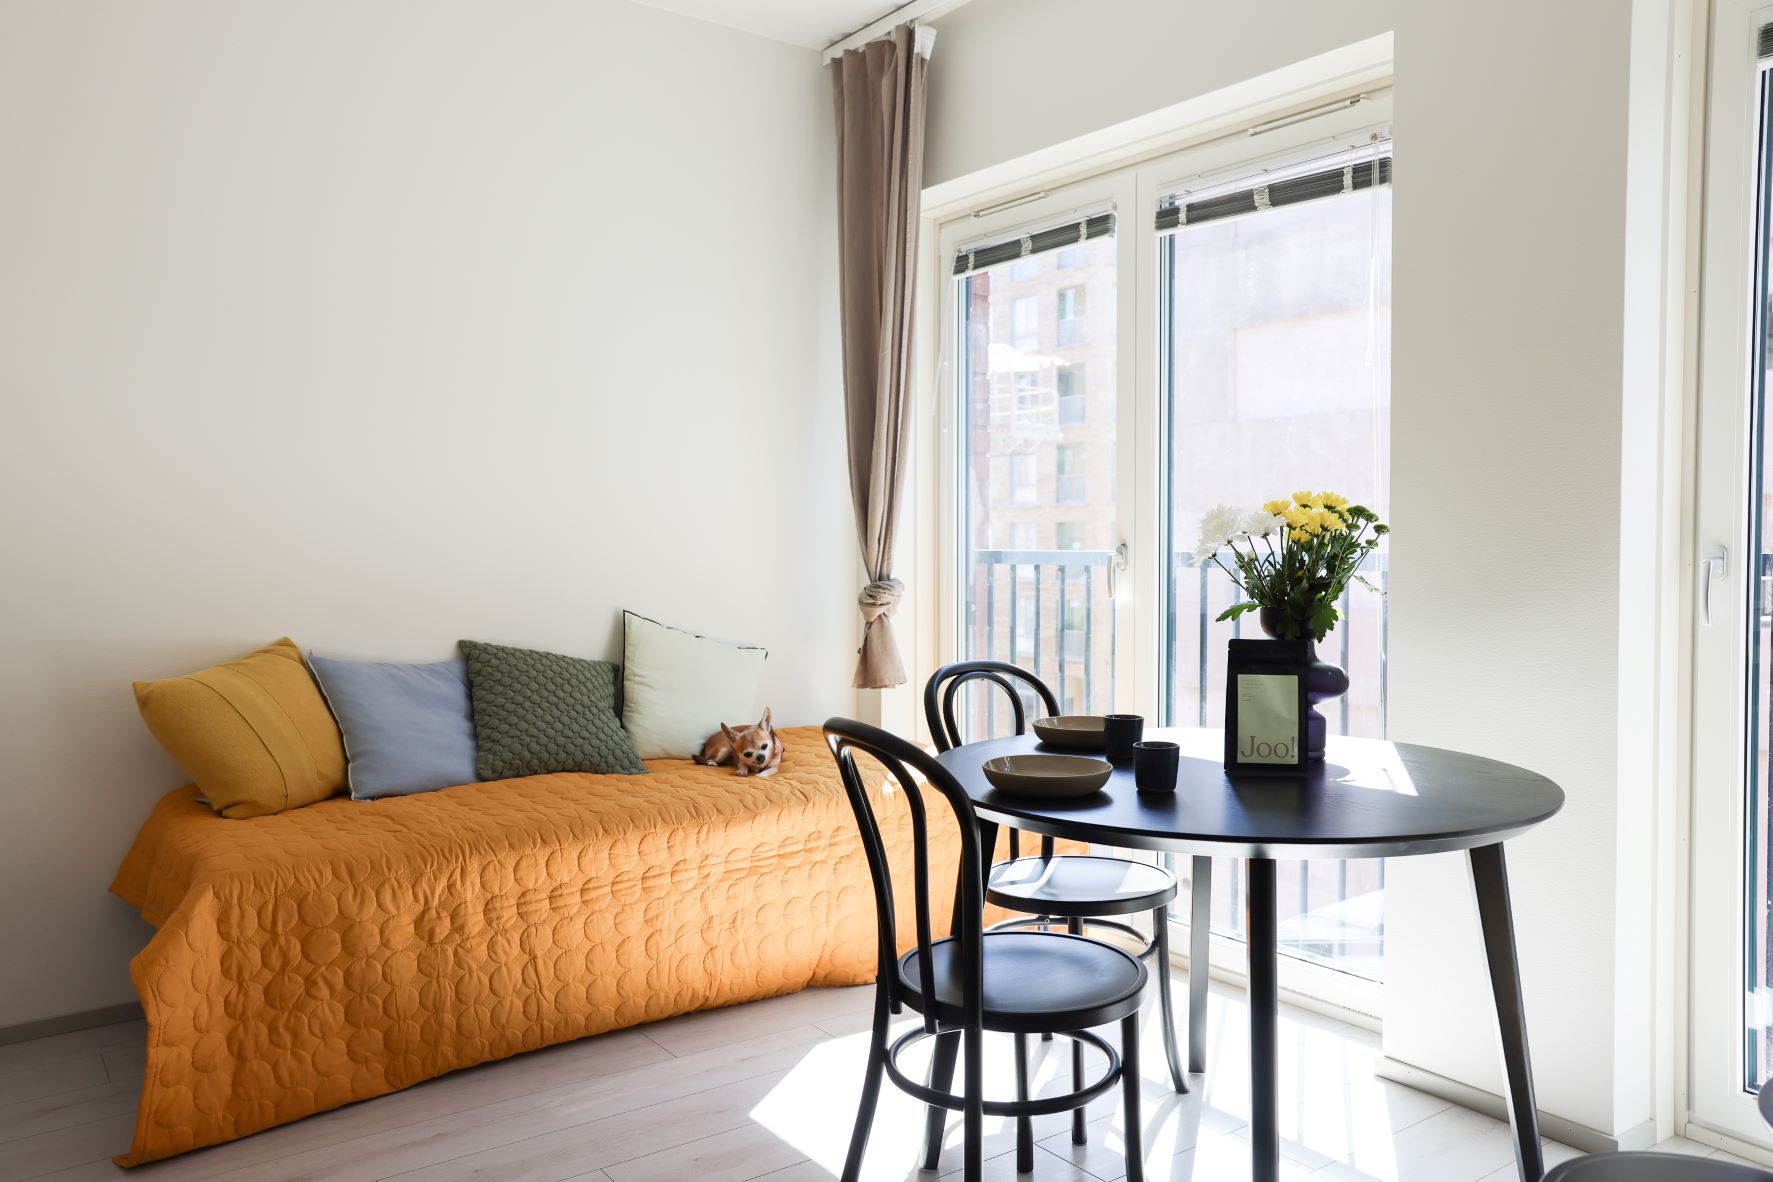 Joo+ furnished rental apartments